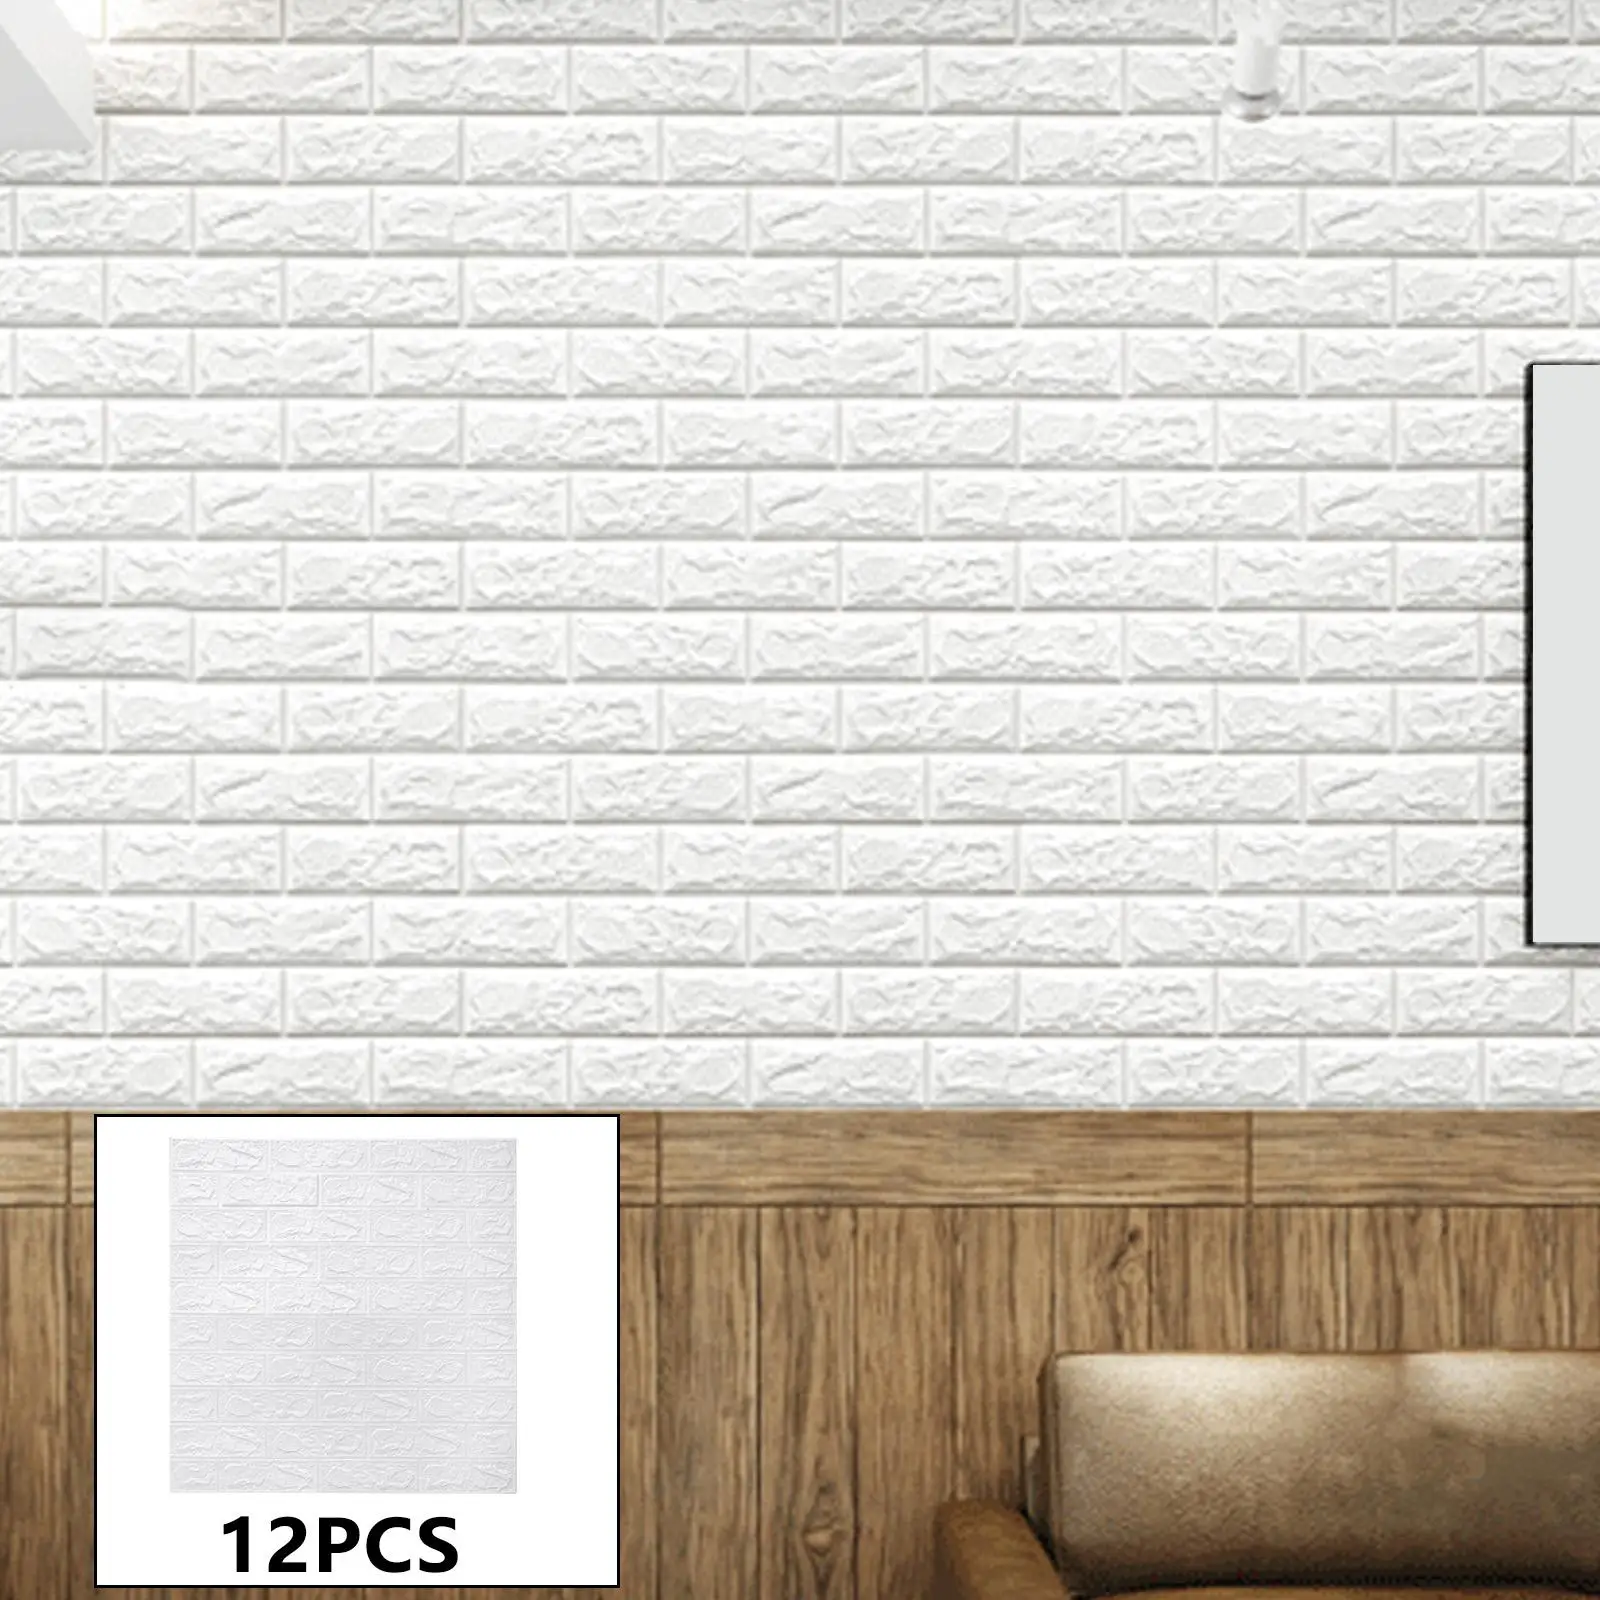 12Pcs 3D Brick Wall Panels Wall Panels Peel and Stick Foam Wall Panels for Living Room Bedroom Kitchen TV Wall Decoration